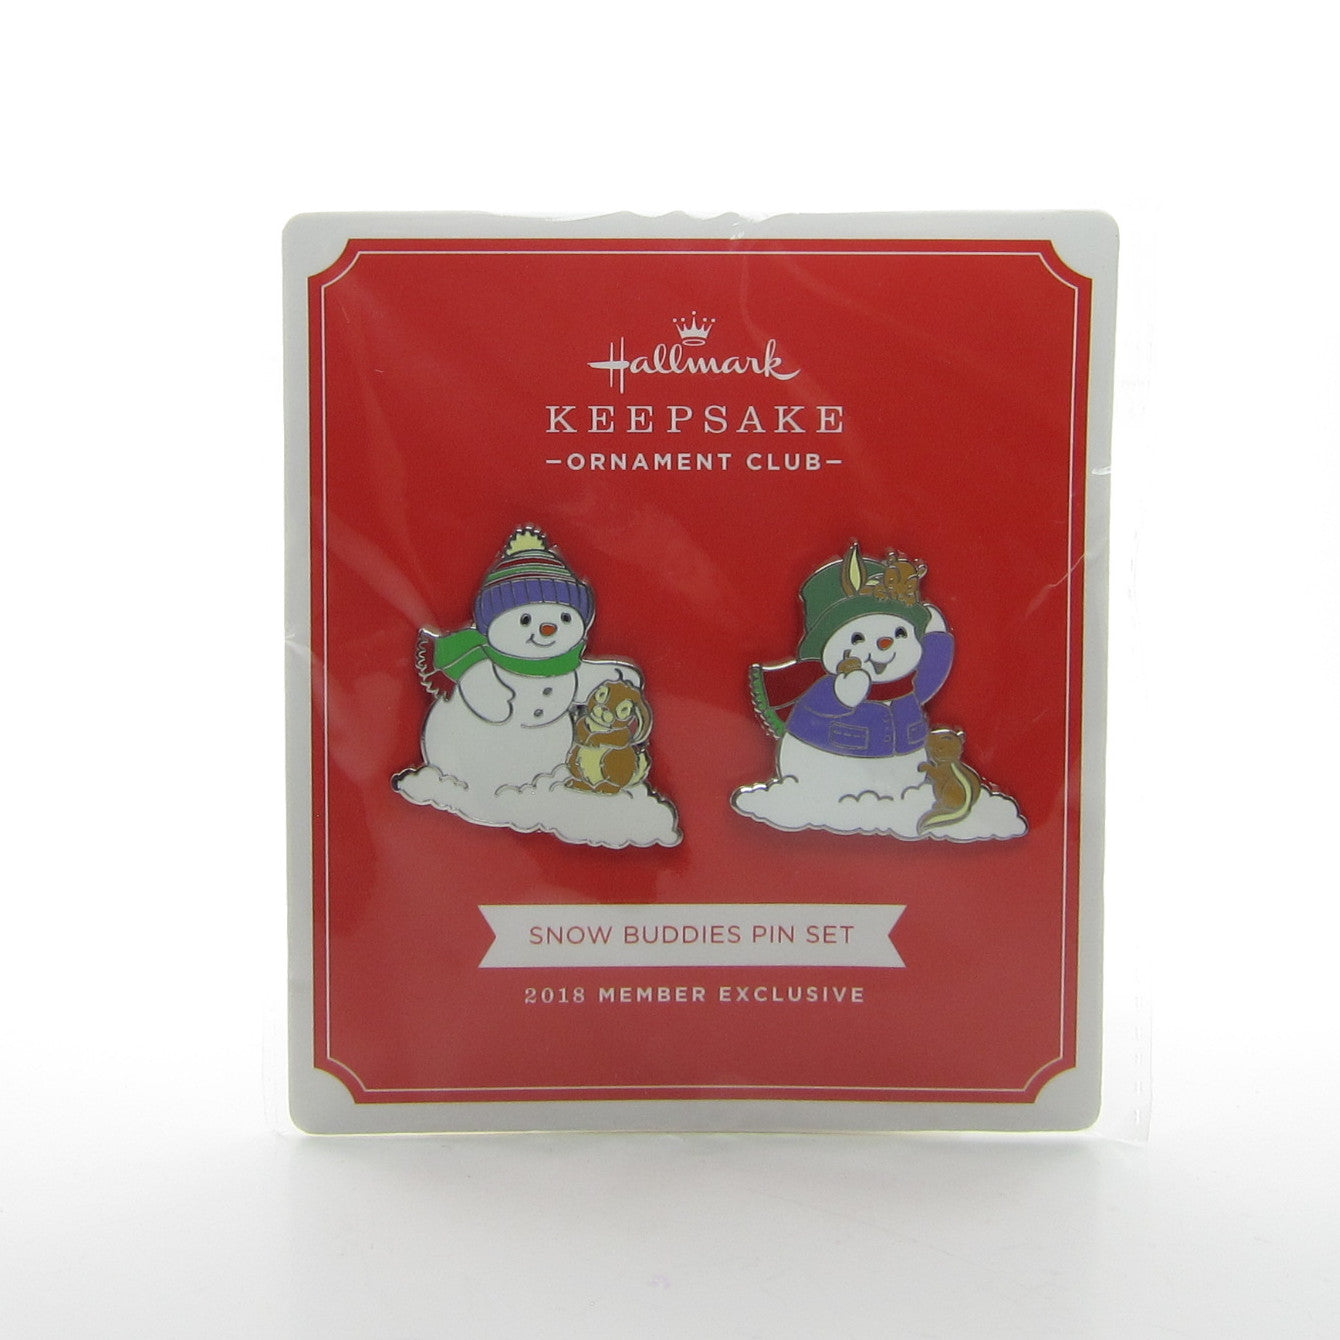 Snow Buddies pin set 2018 Hallmark Keepsake Ornament Club member exclusive